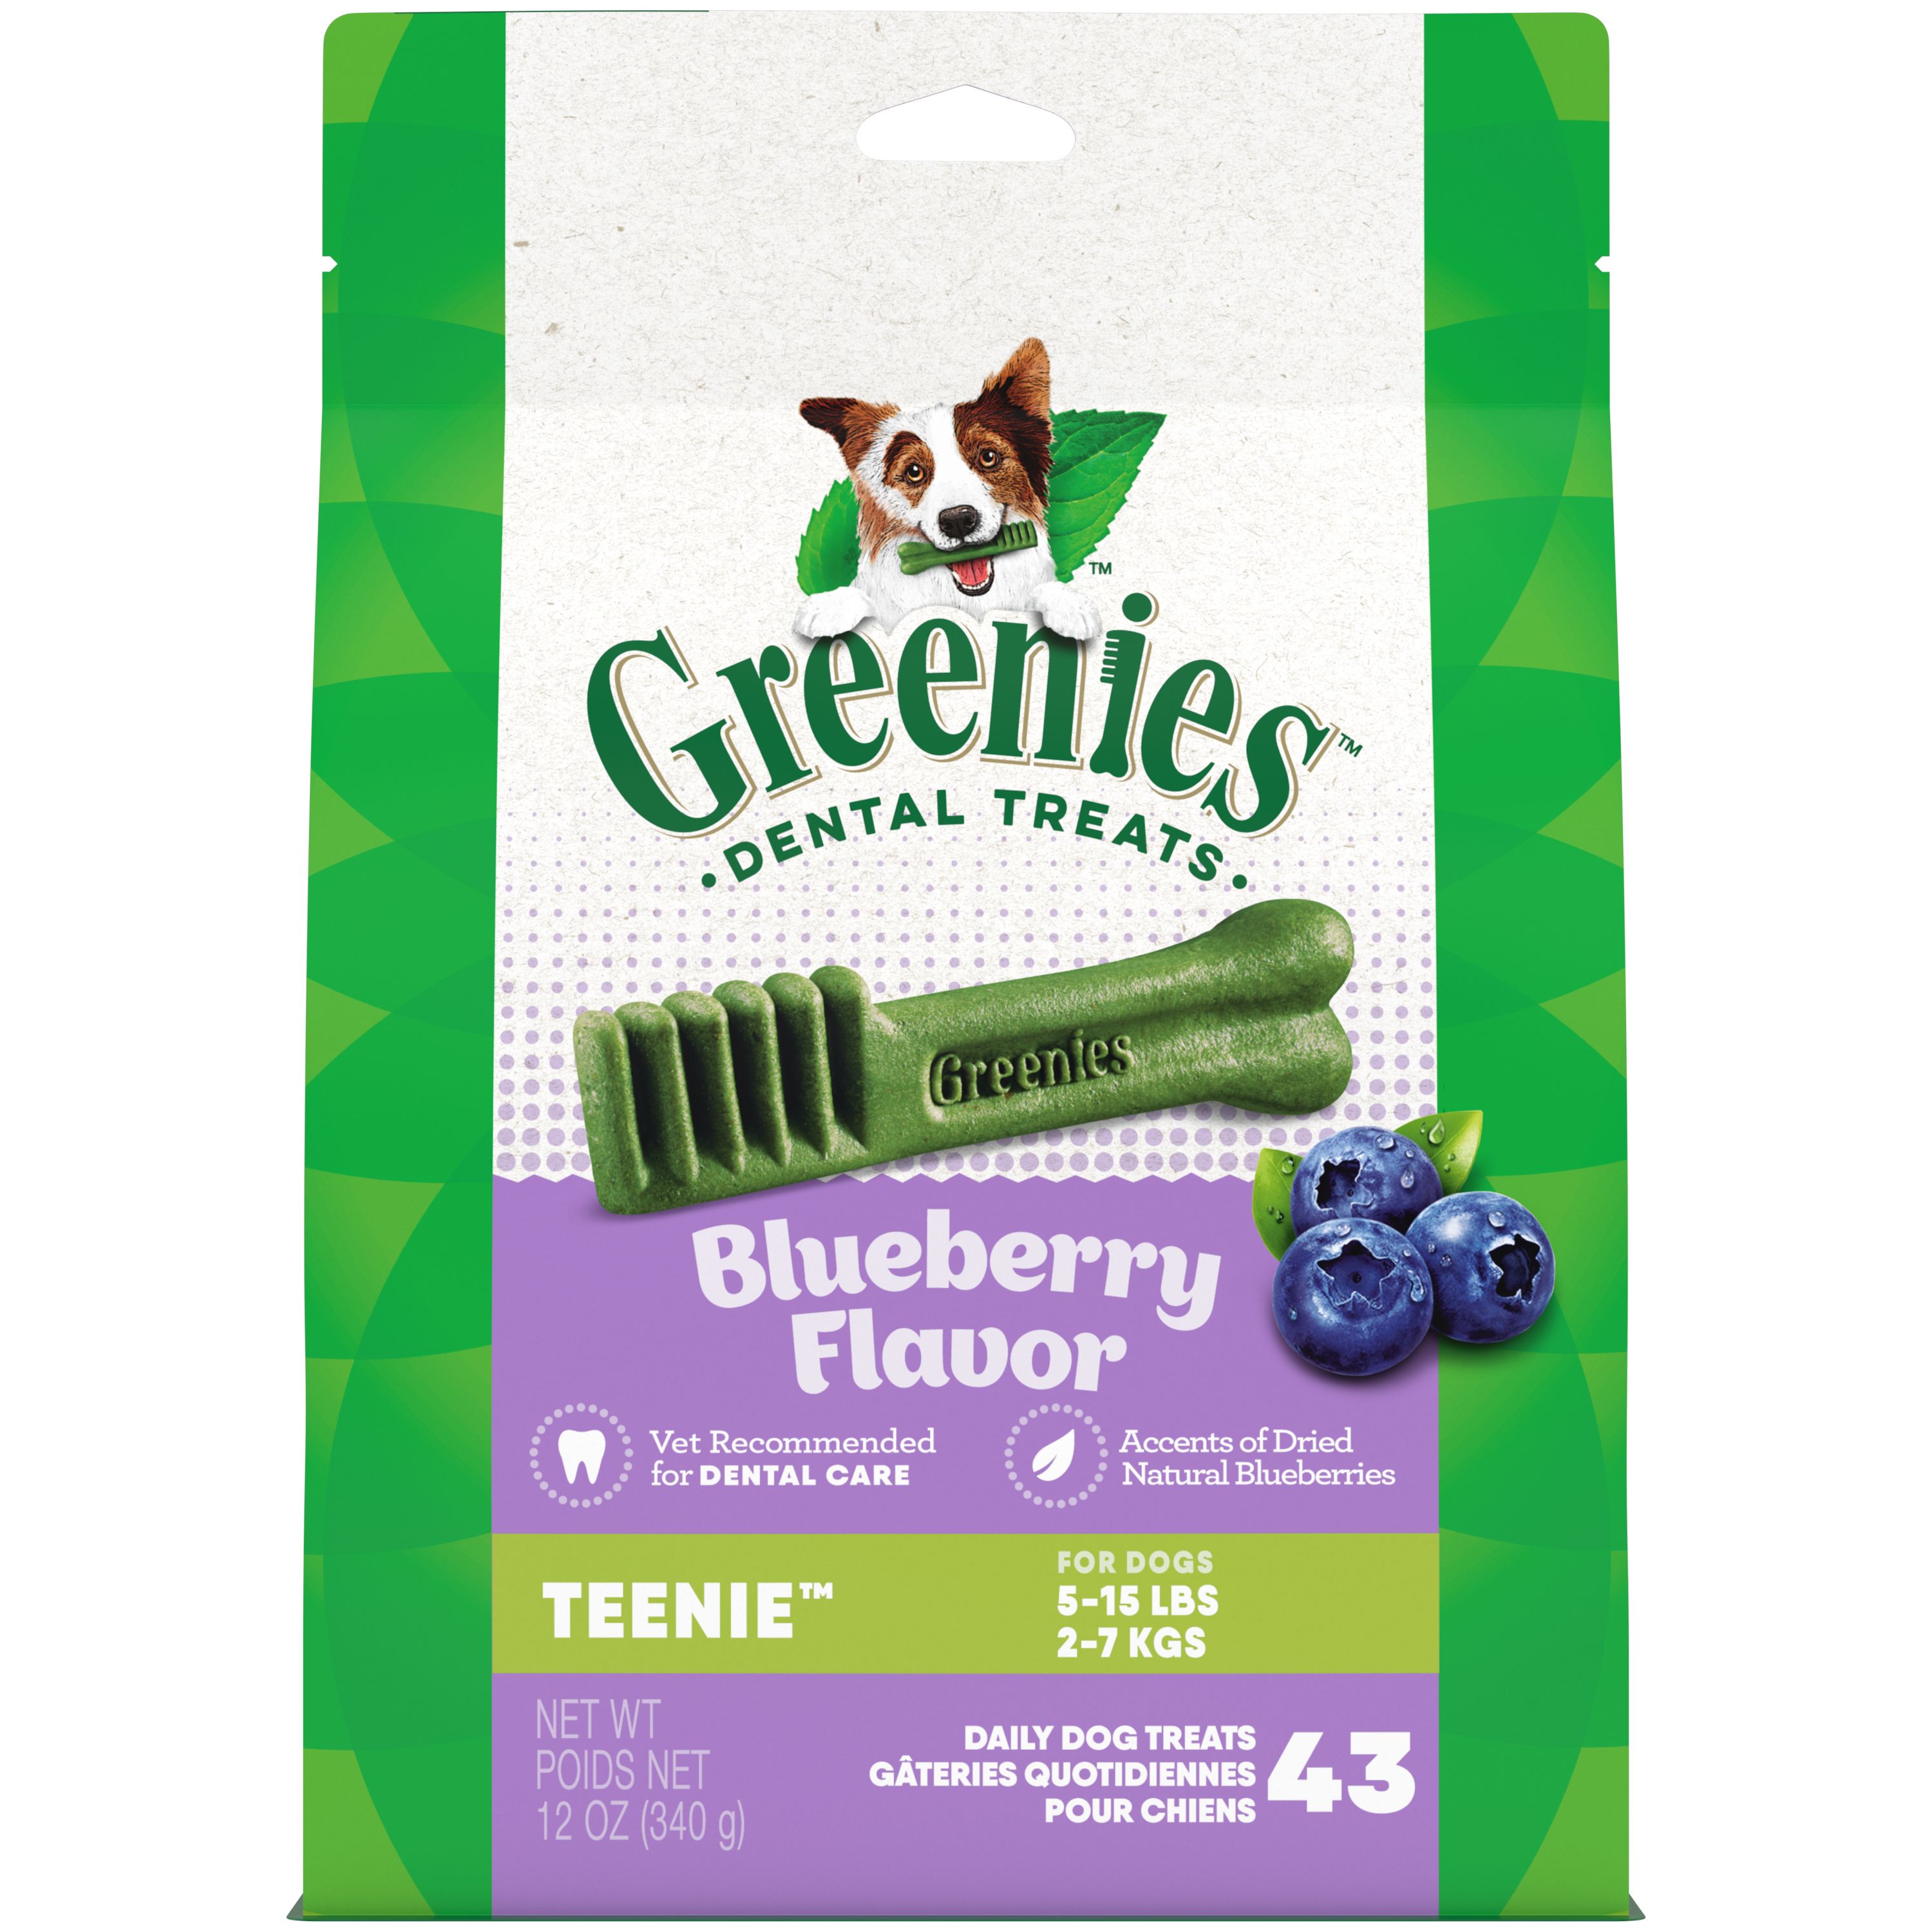 12 oz. Greenies Teenie Blueberry Treat Pack - Treats